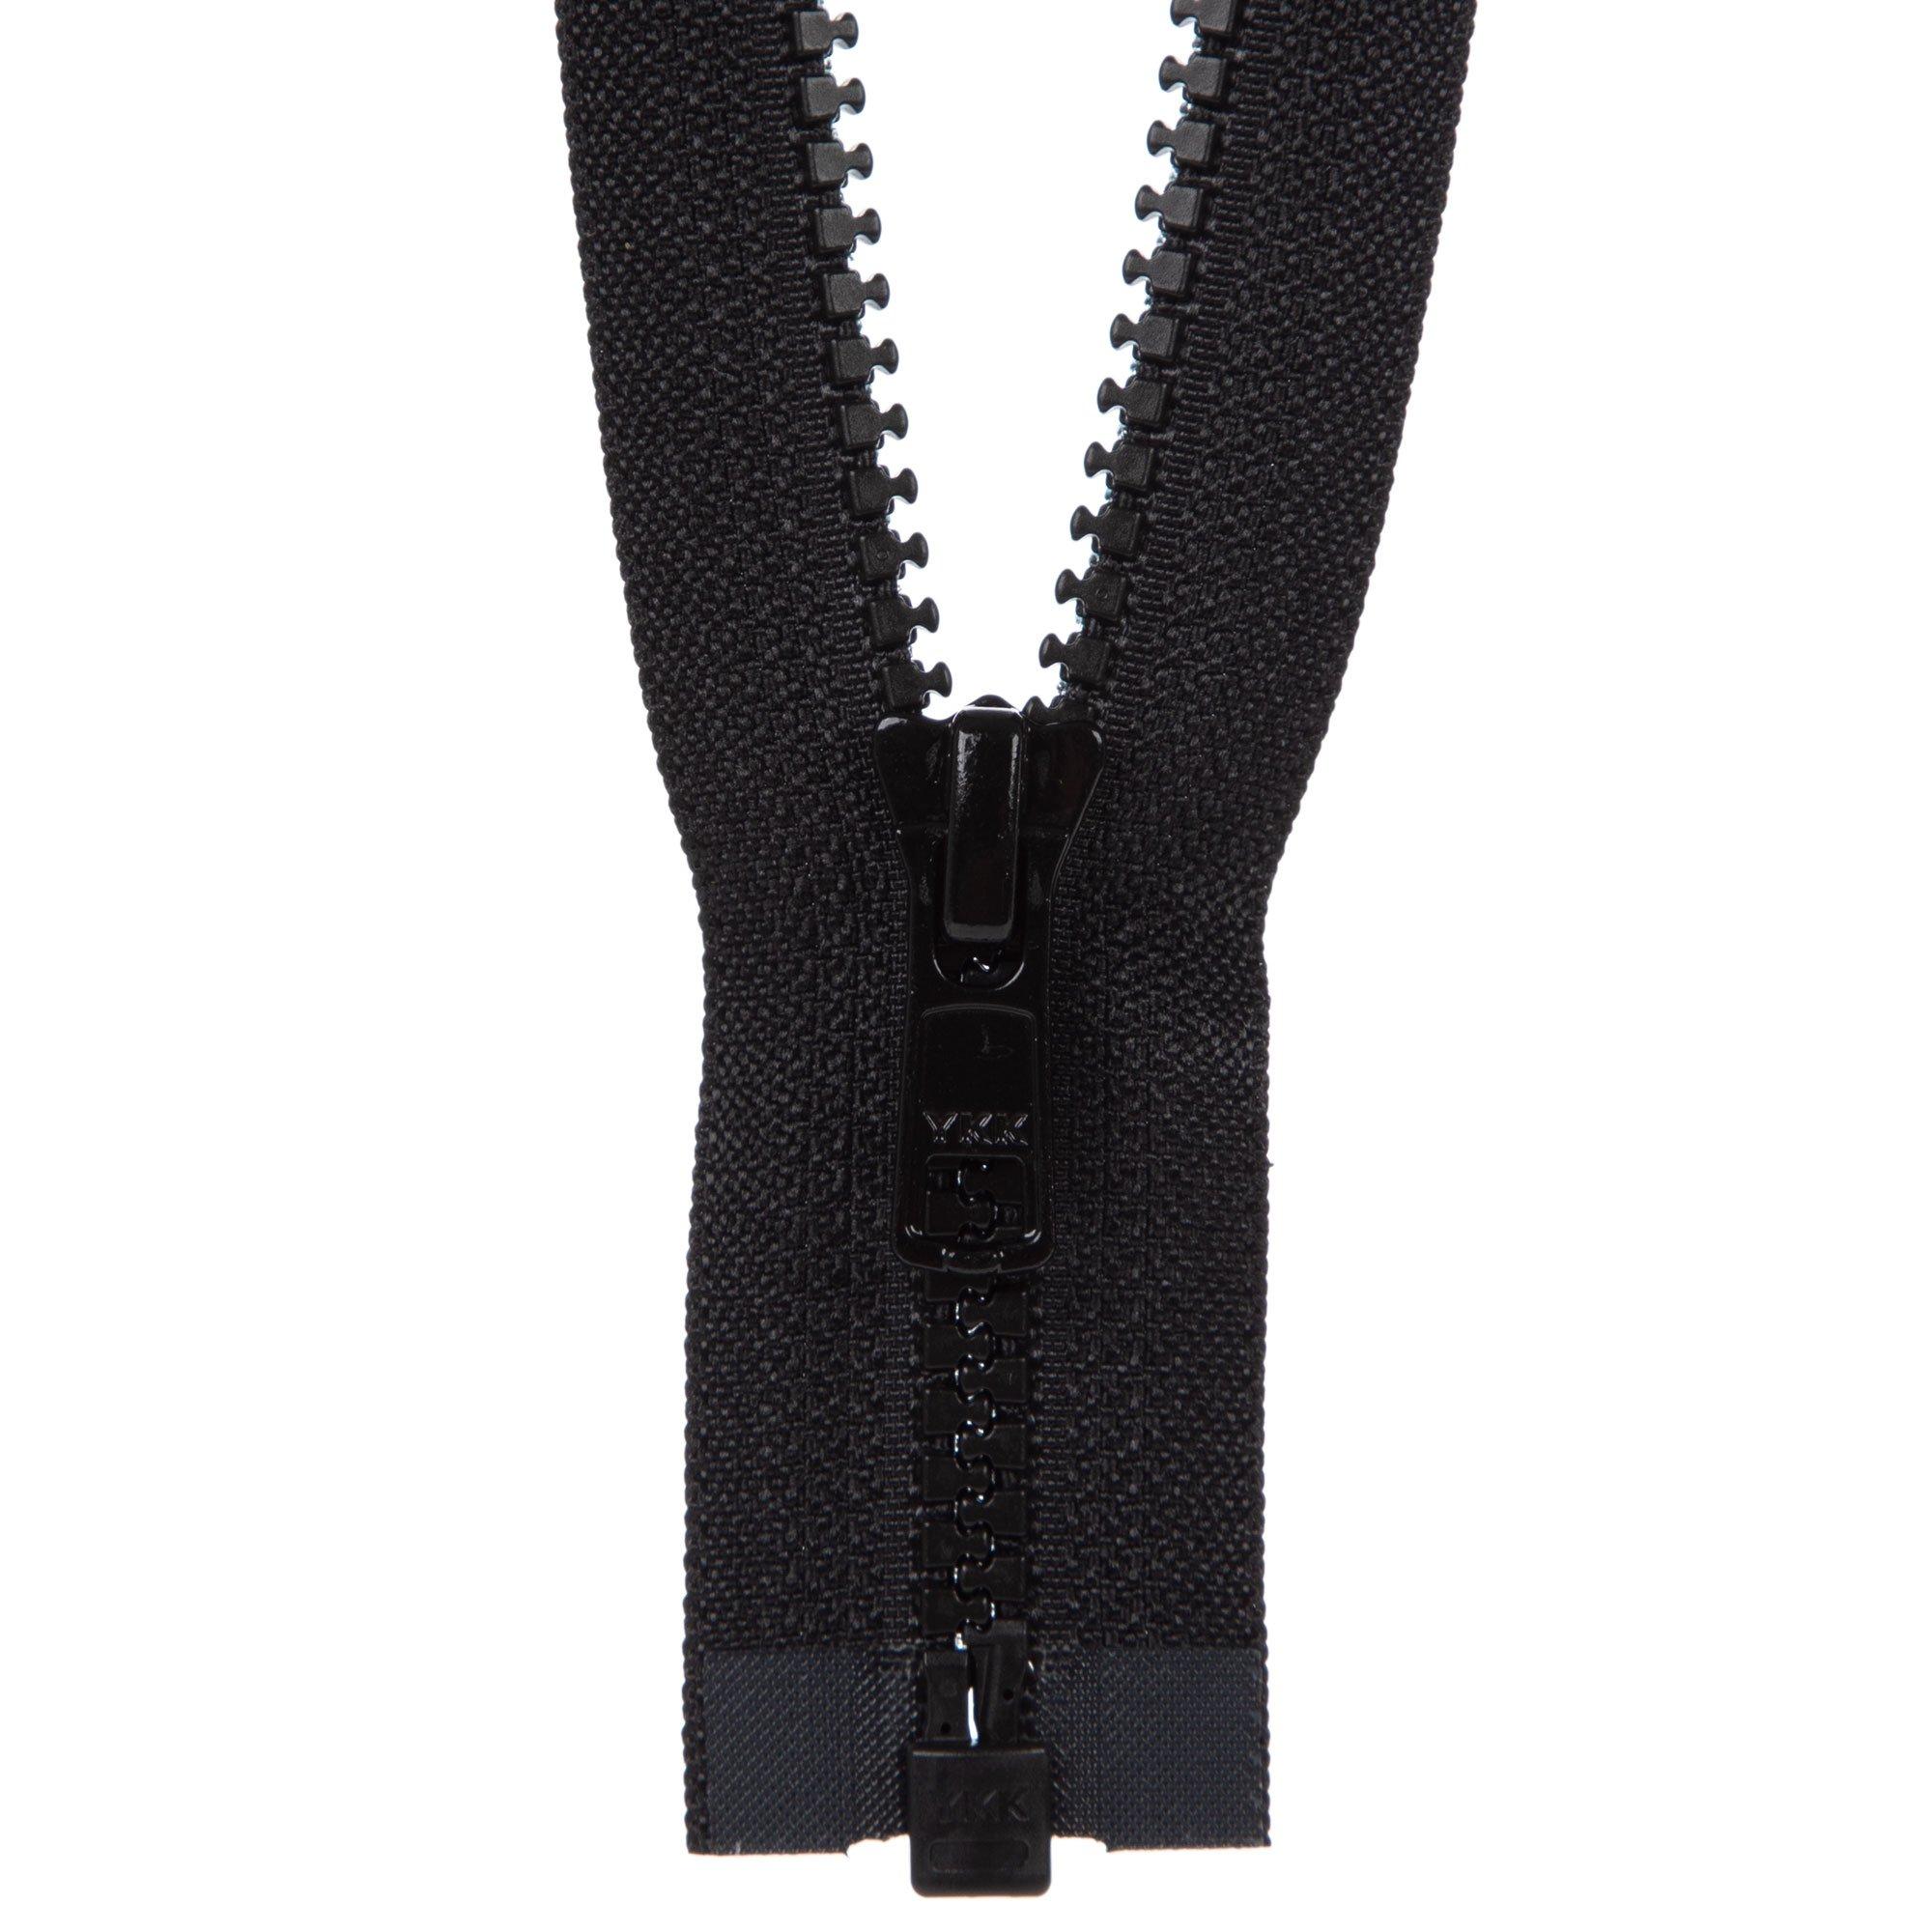 Black YKK Zipper 22 Long Quantity of 1